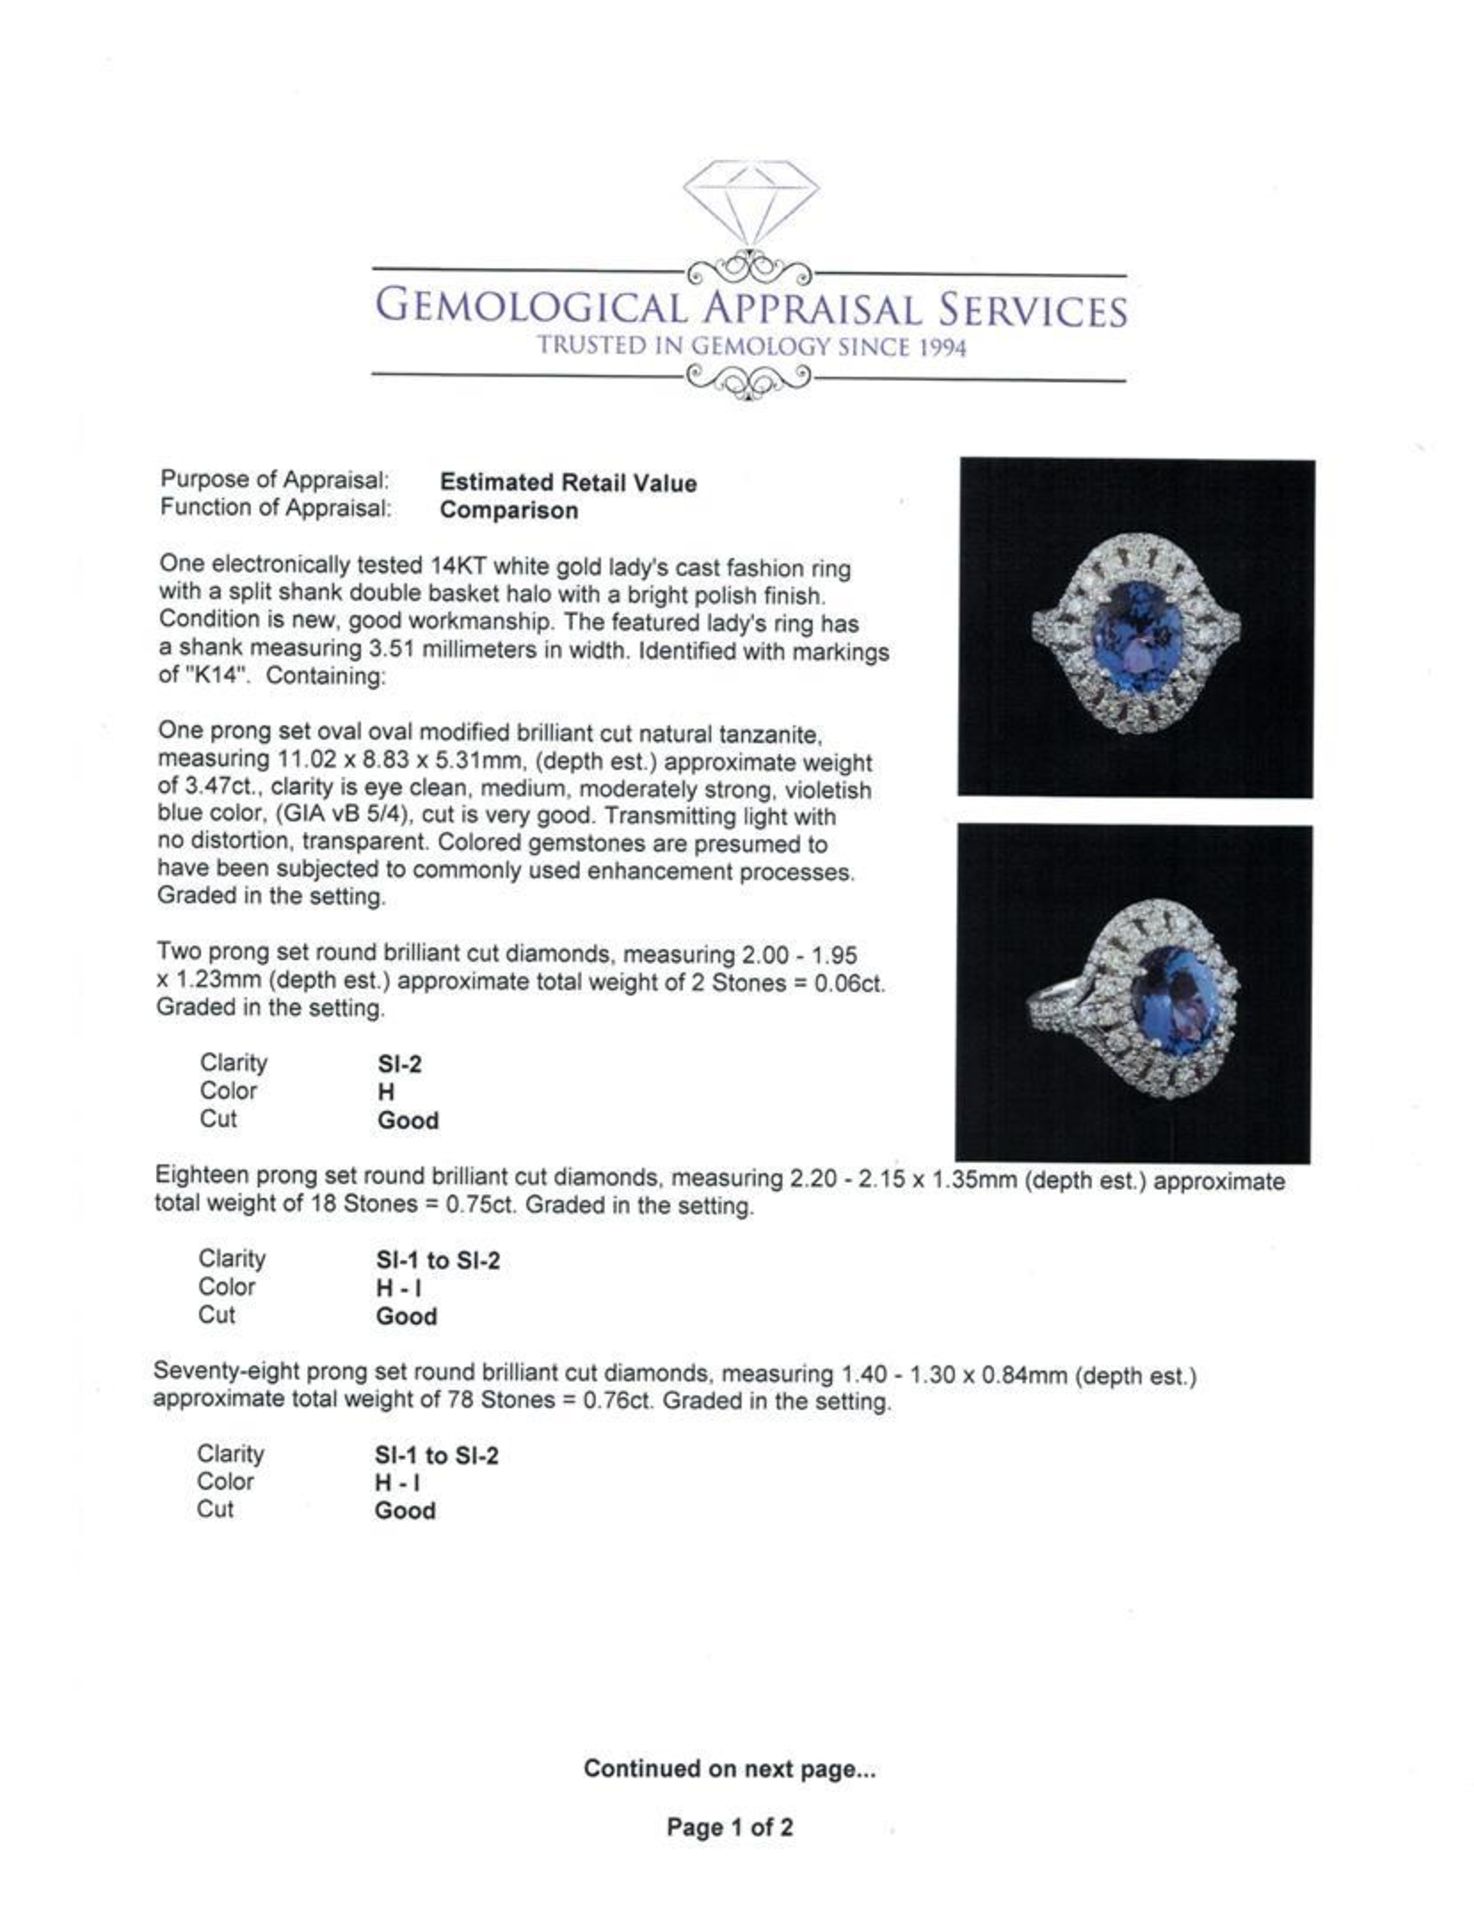 3.47 ctw Tanzanite and Diamond Ring - 14KT White Gold - Image 5 of 6